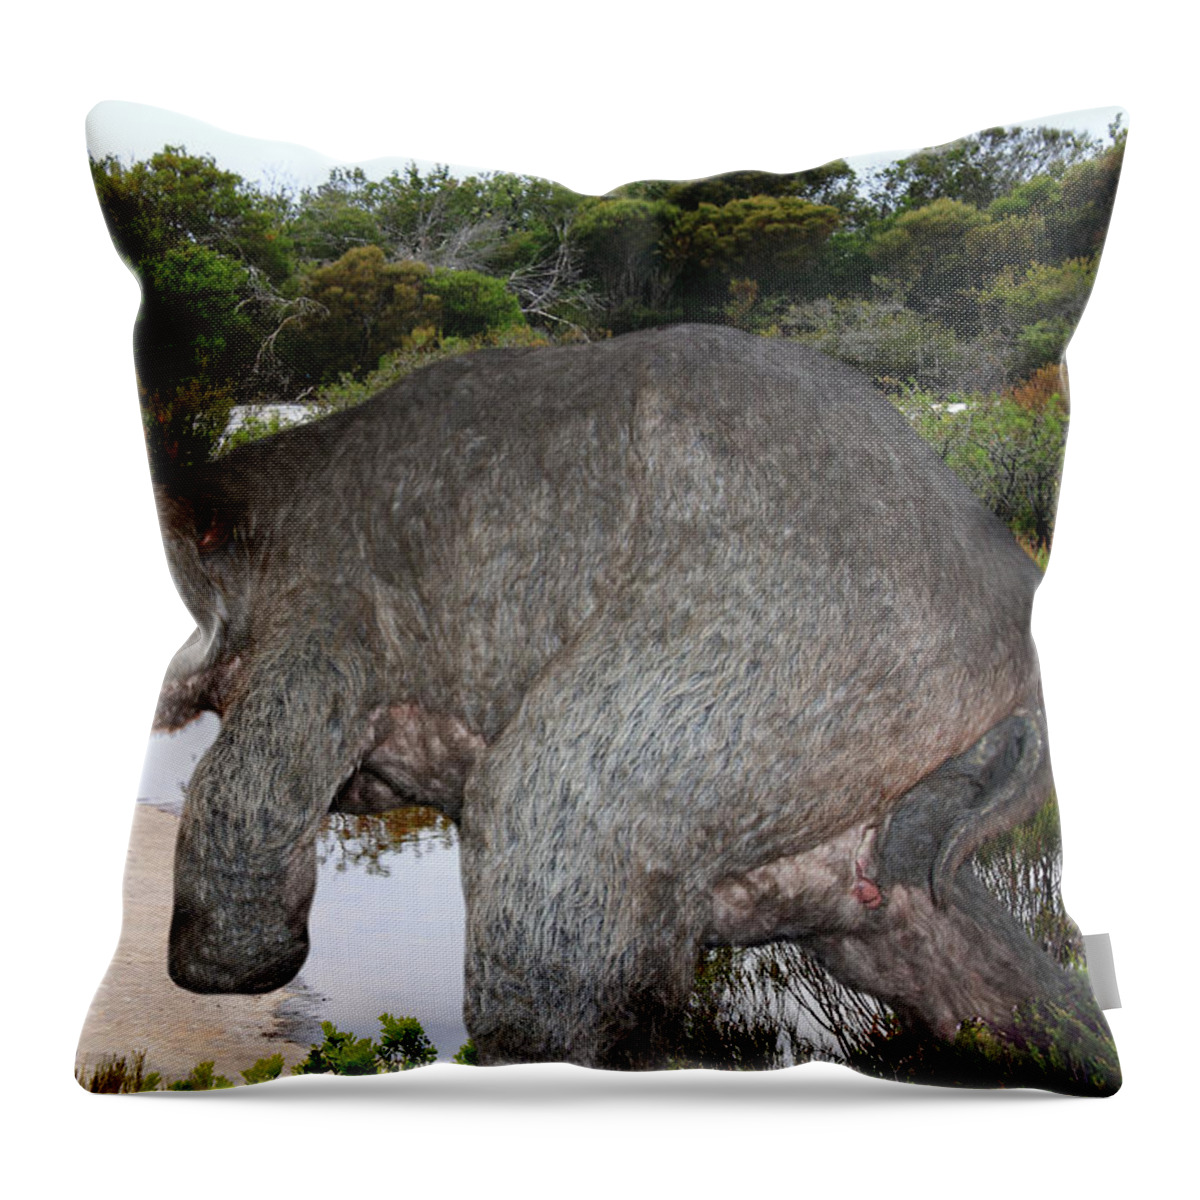 Diprotodon Throw Pillow featuring the photograph Diprotodon by Miroslava Jurcik